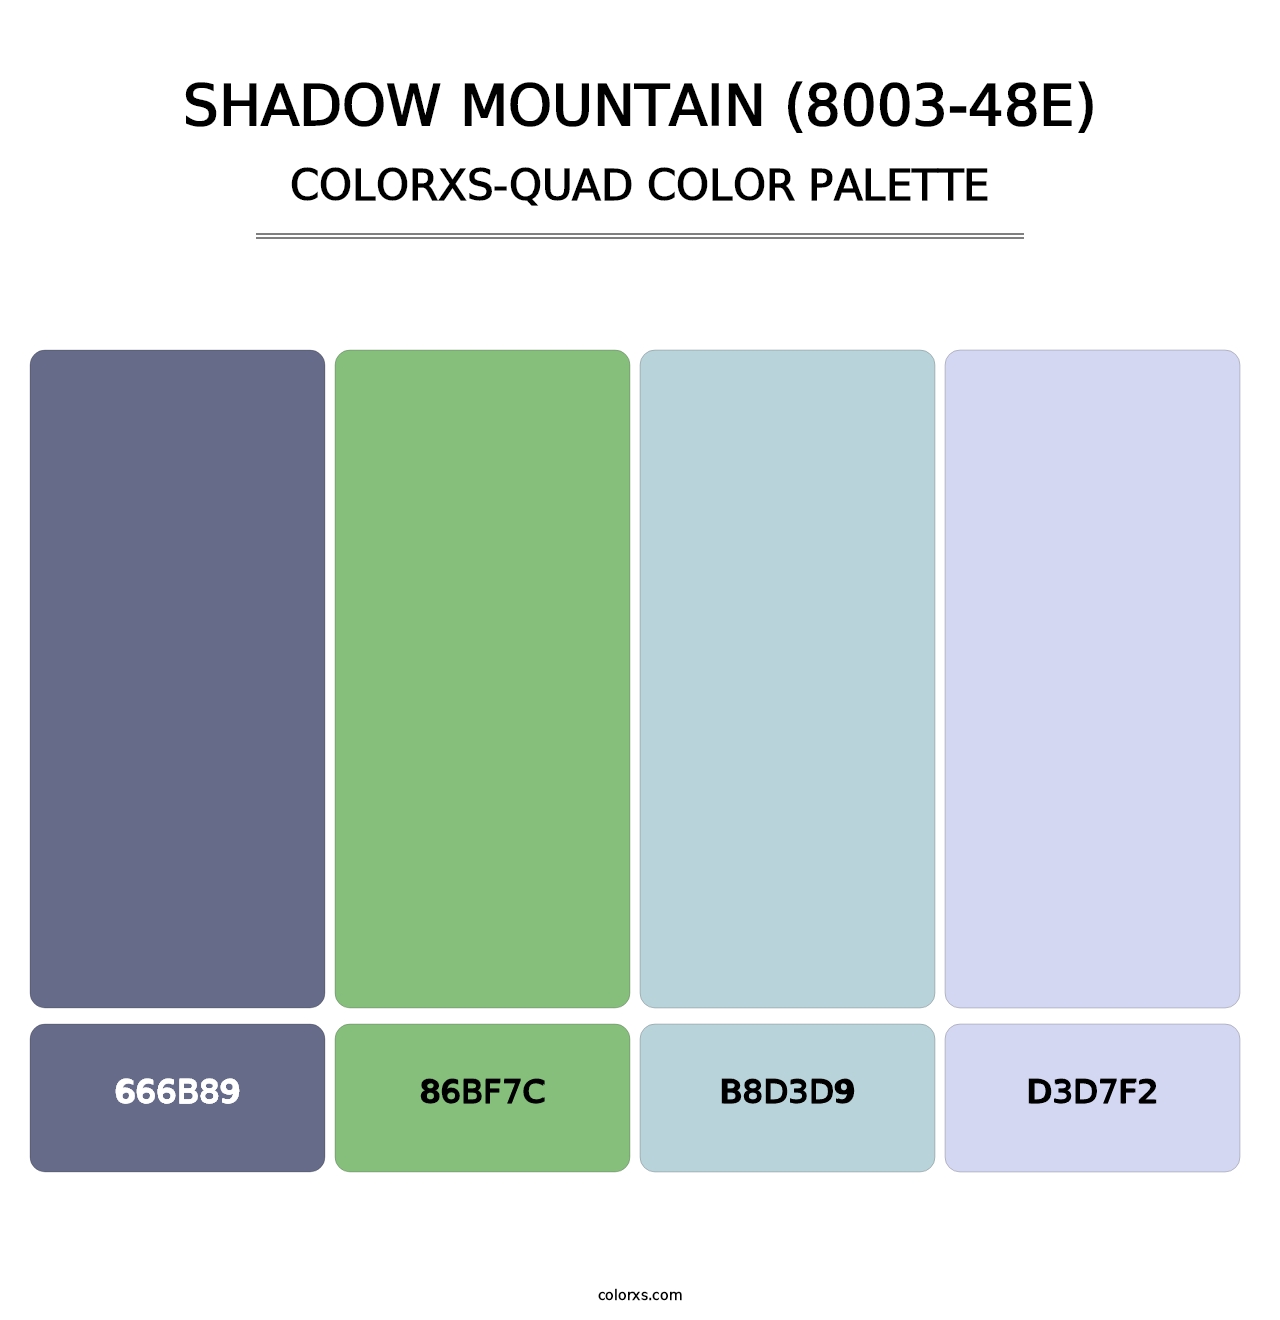 Shadow Mountain (8003-48E) - Colorxs Quad Palette